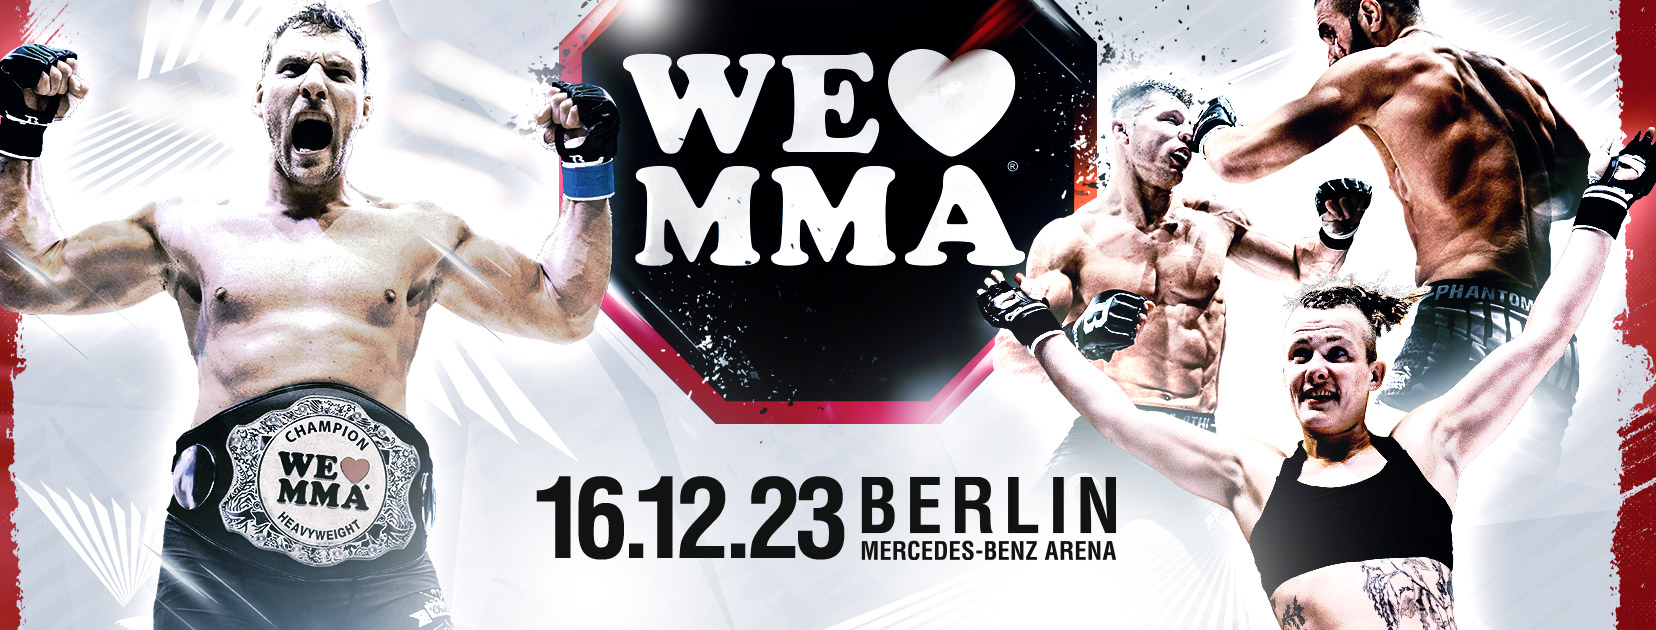 We love MMA Berlin